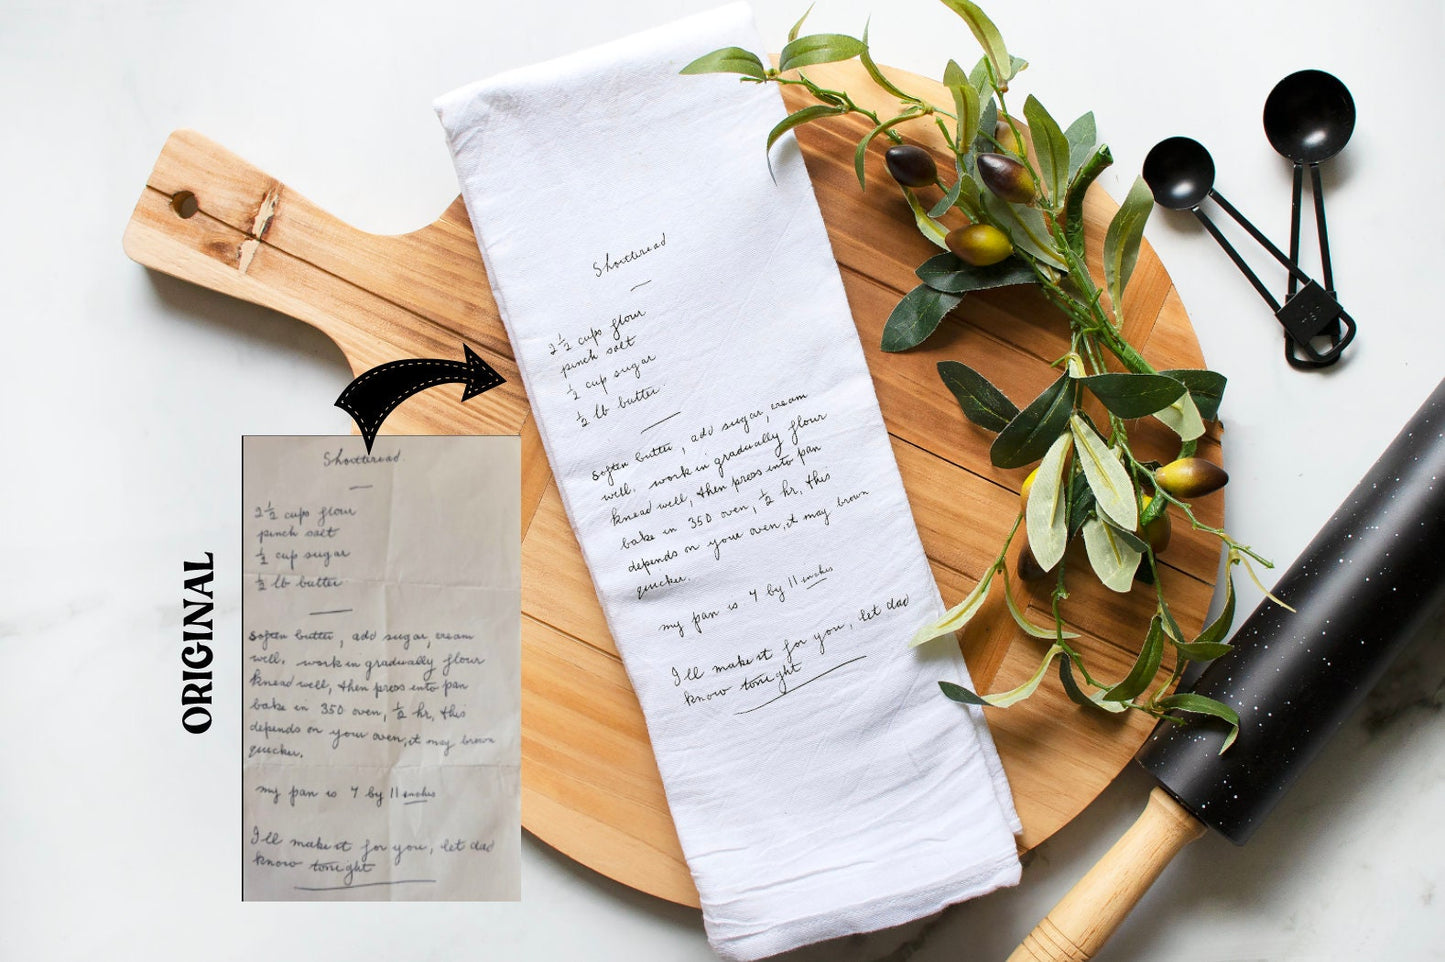 Your handwritten Recipe/Letter transferred to Tea Towel